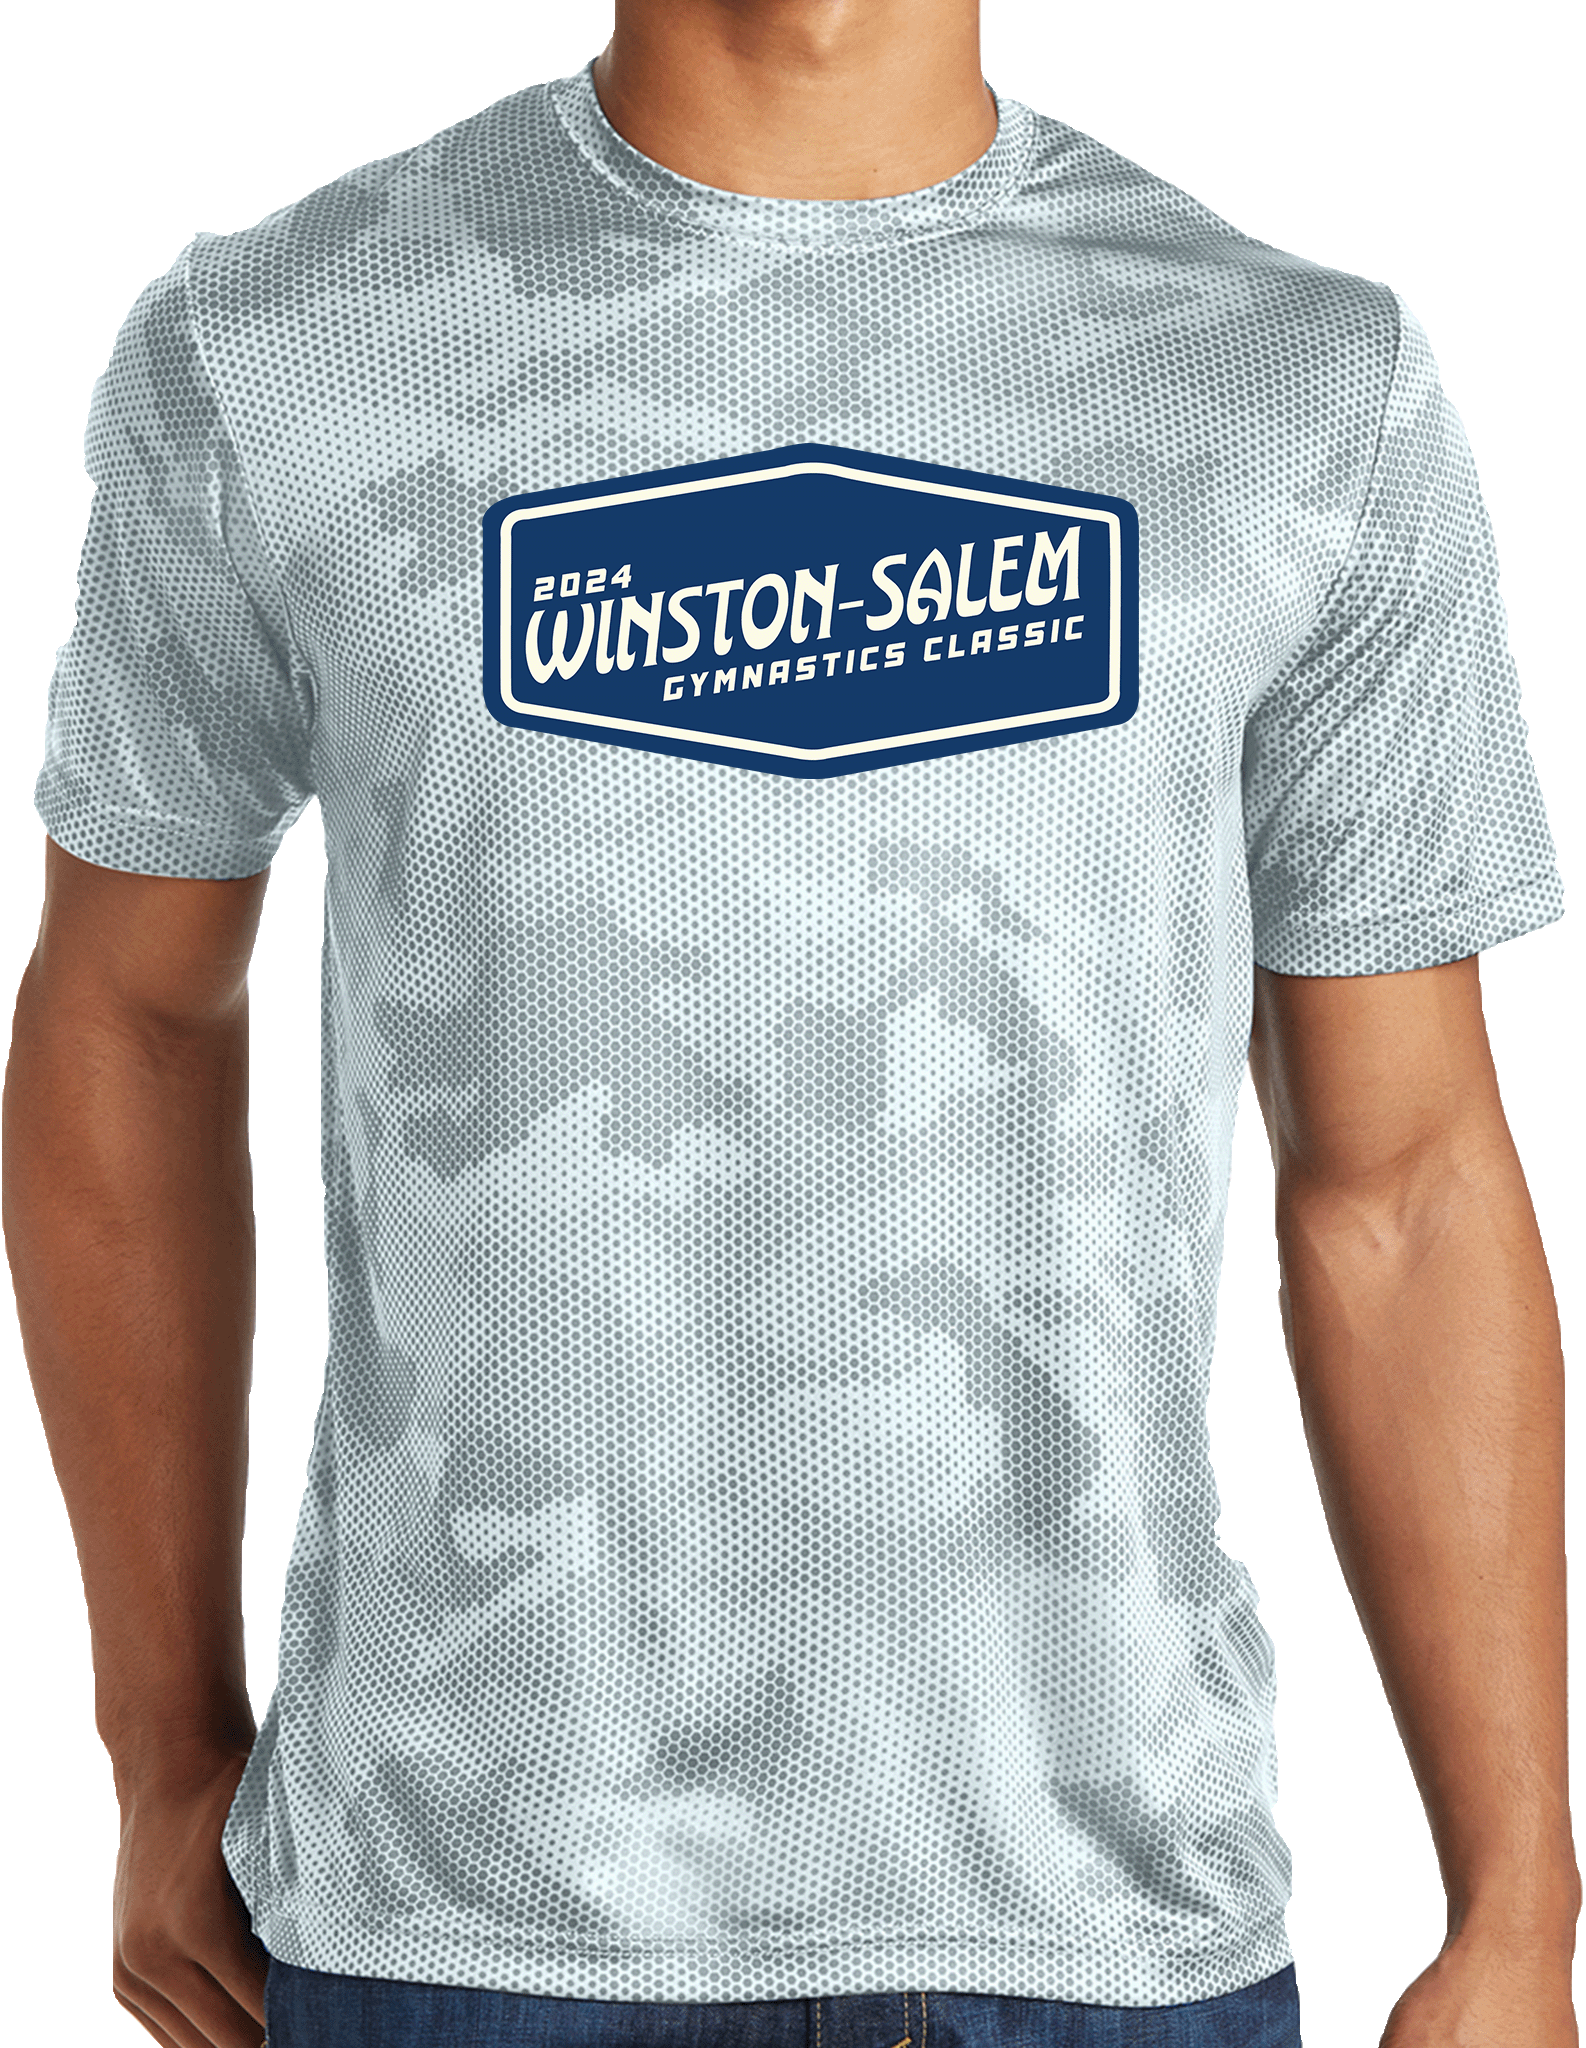 Performance Shirts - 2024 Winston Salem Gymnastics Classic